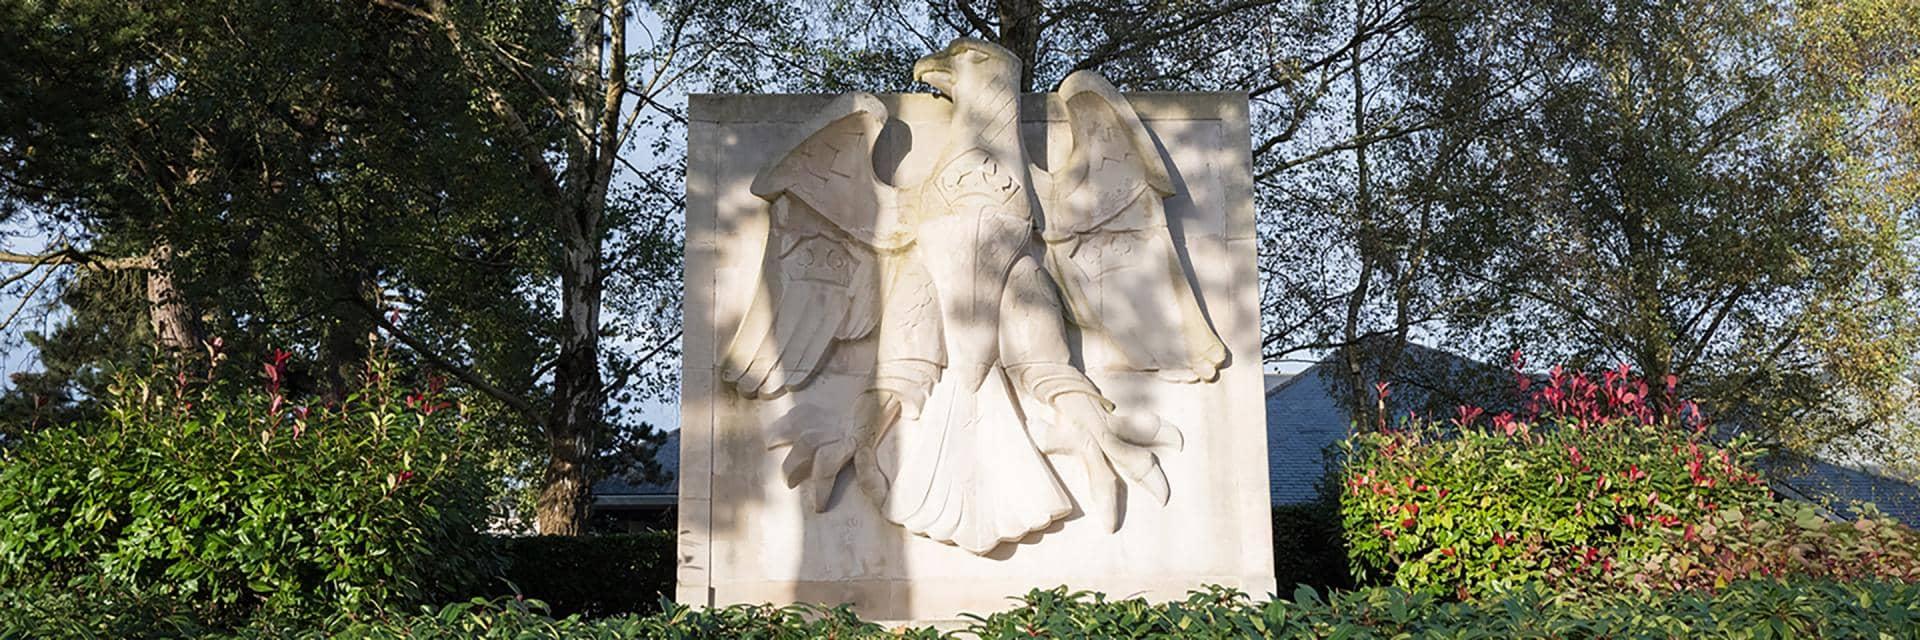 Exterior shot of Barclays Eagle statue